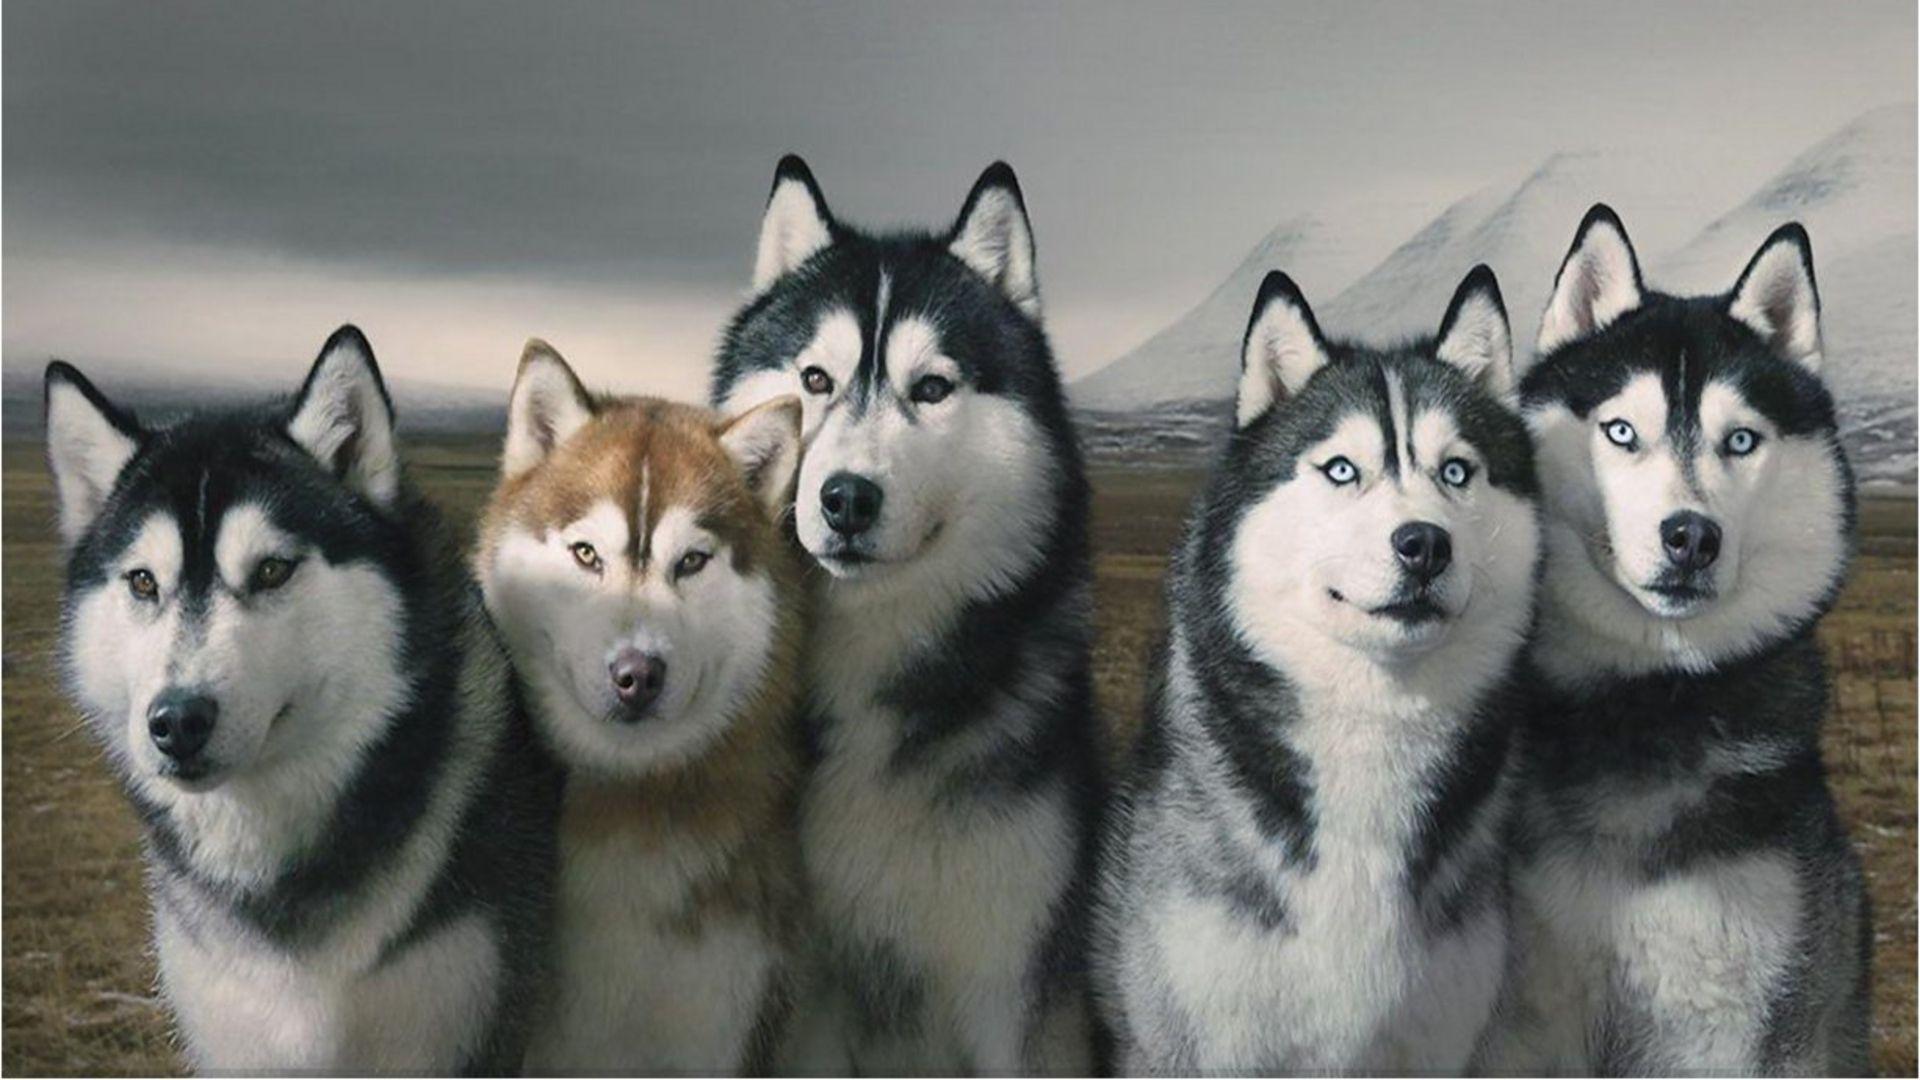 Siberian Husky Wallpaper. Most .com